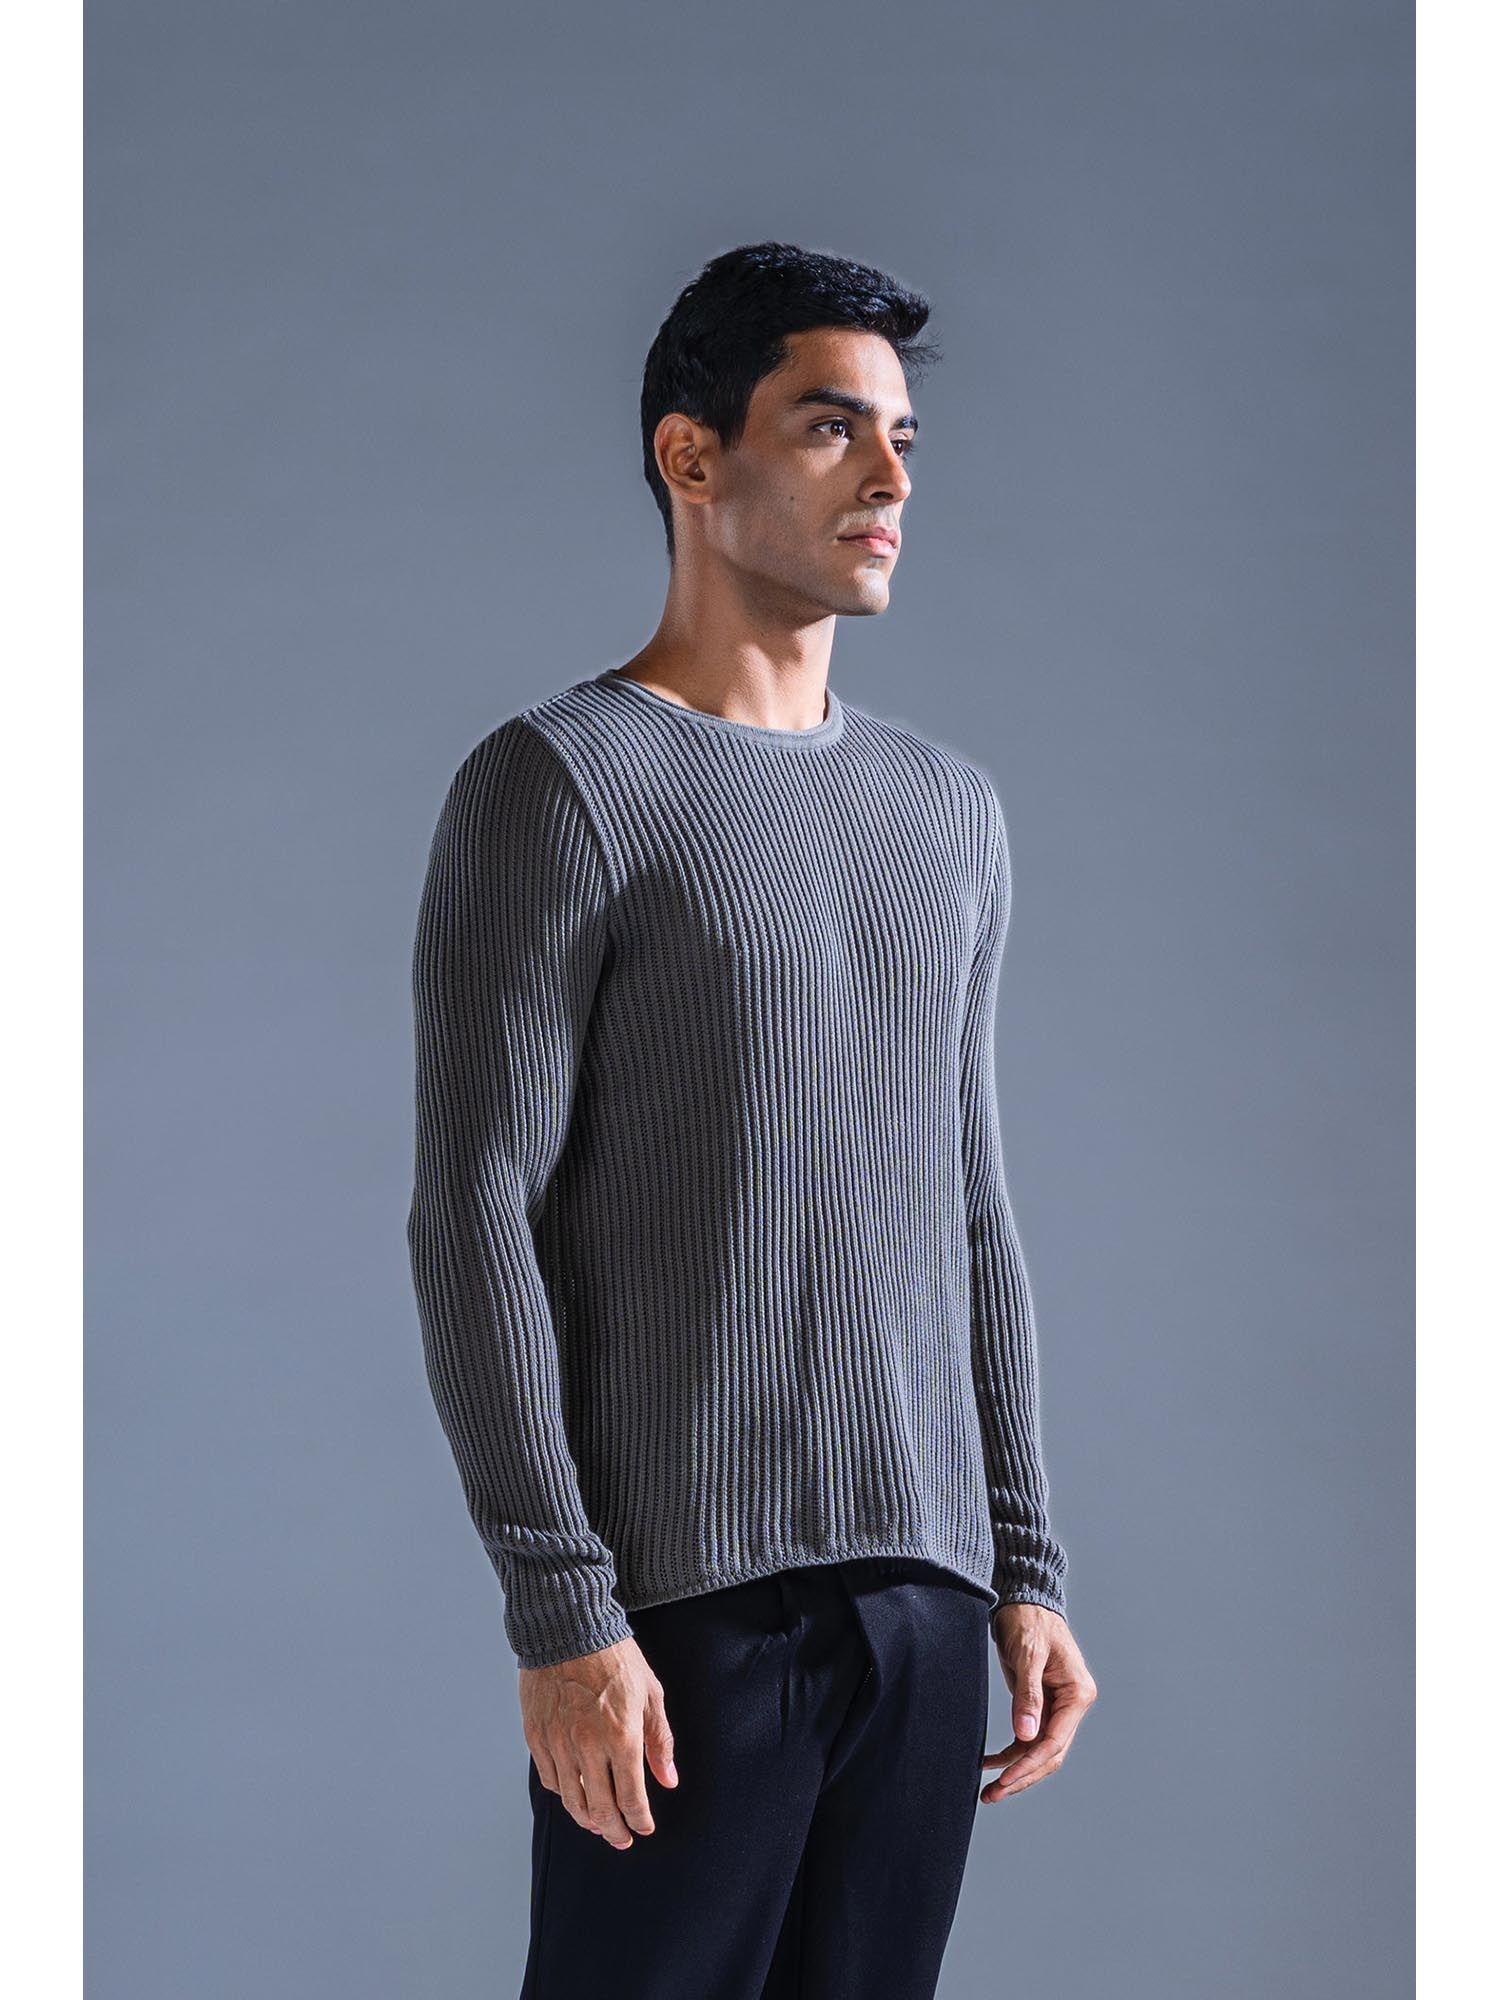 charcoal grey cotton knit sweater mesh knit-sweater